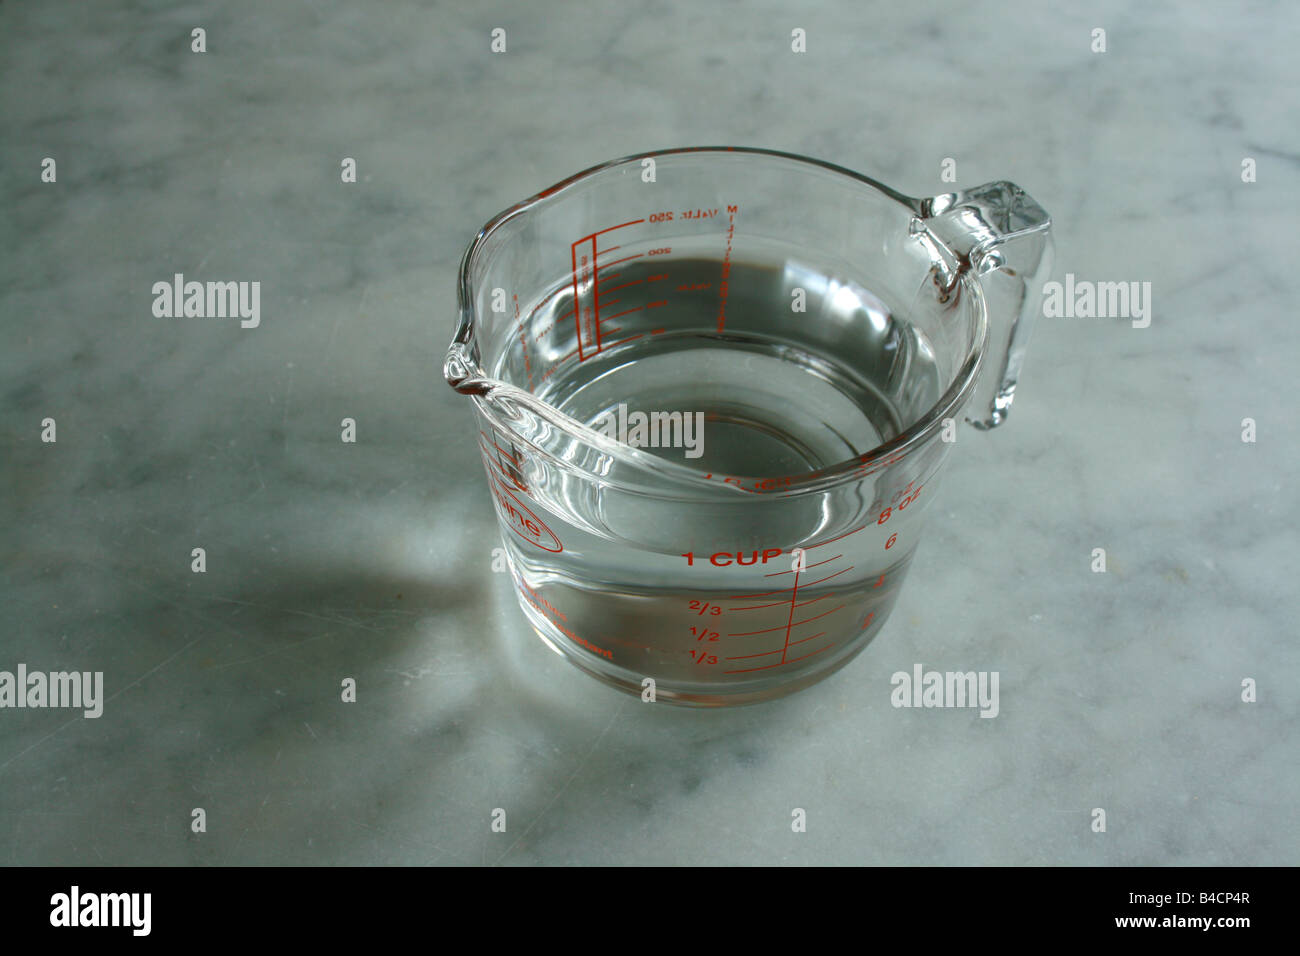 Pyrex glass jug containing water. Stock Photo